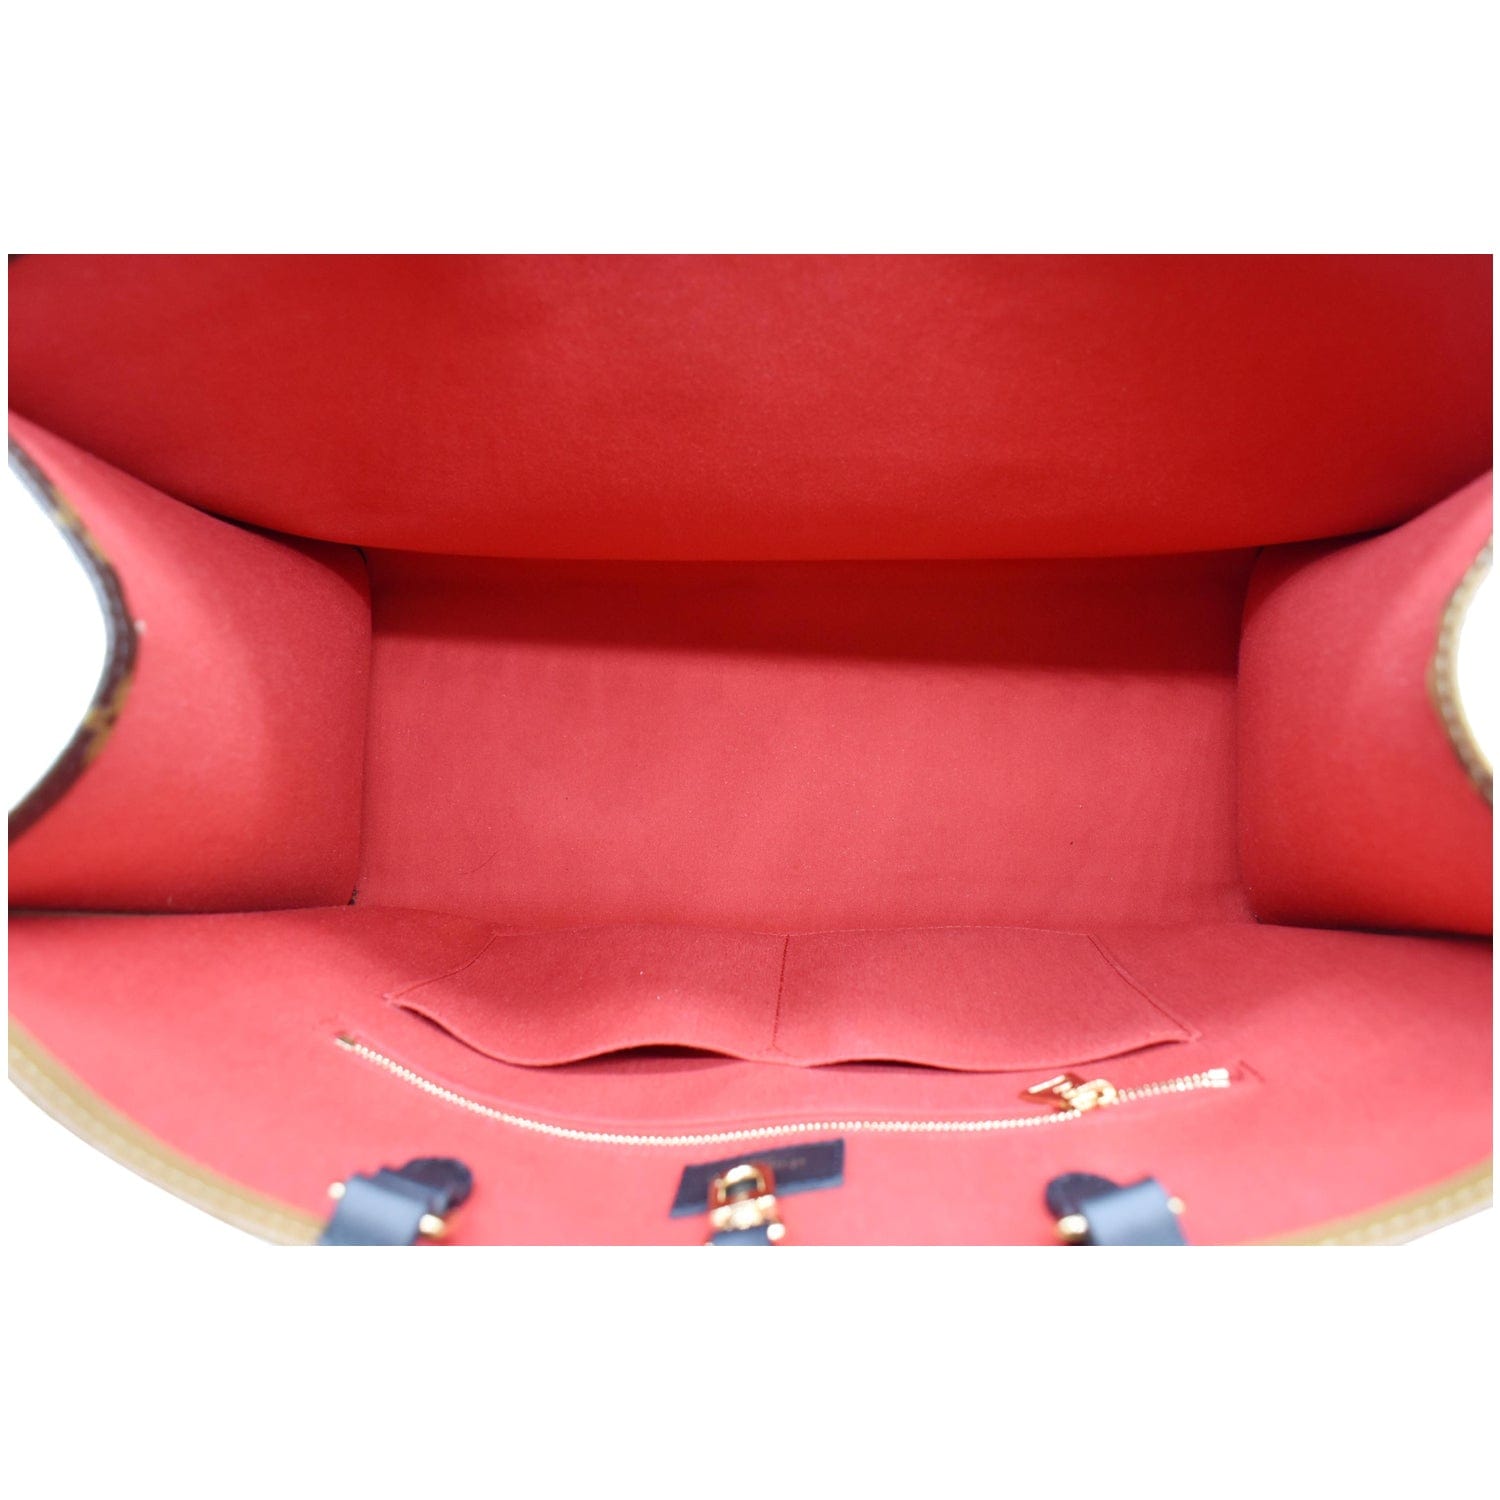 Louis Vuitton Bag Onthego Giant Monogram Red Pink | 3D model